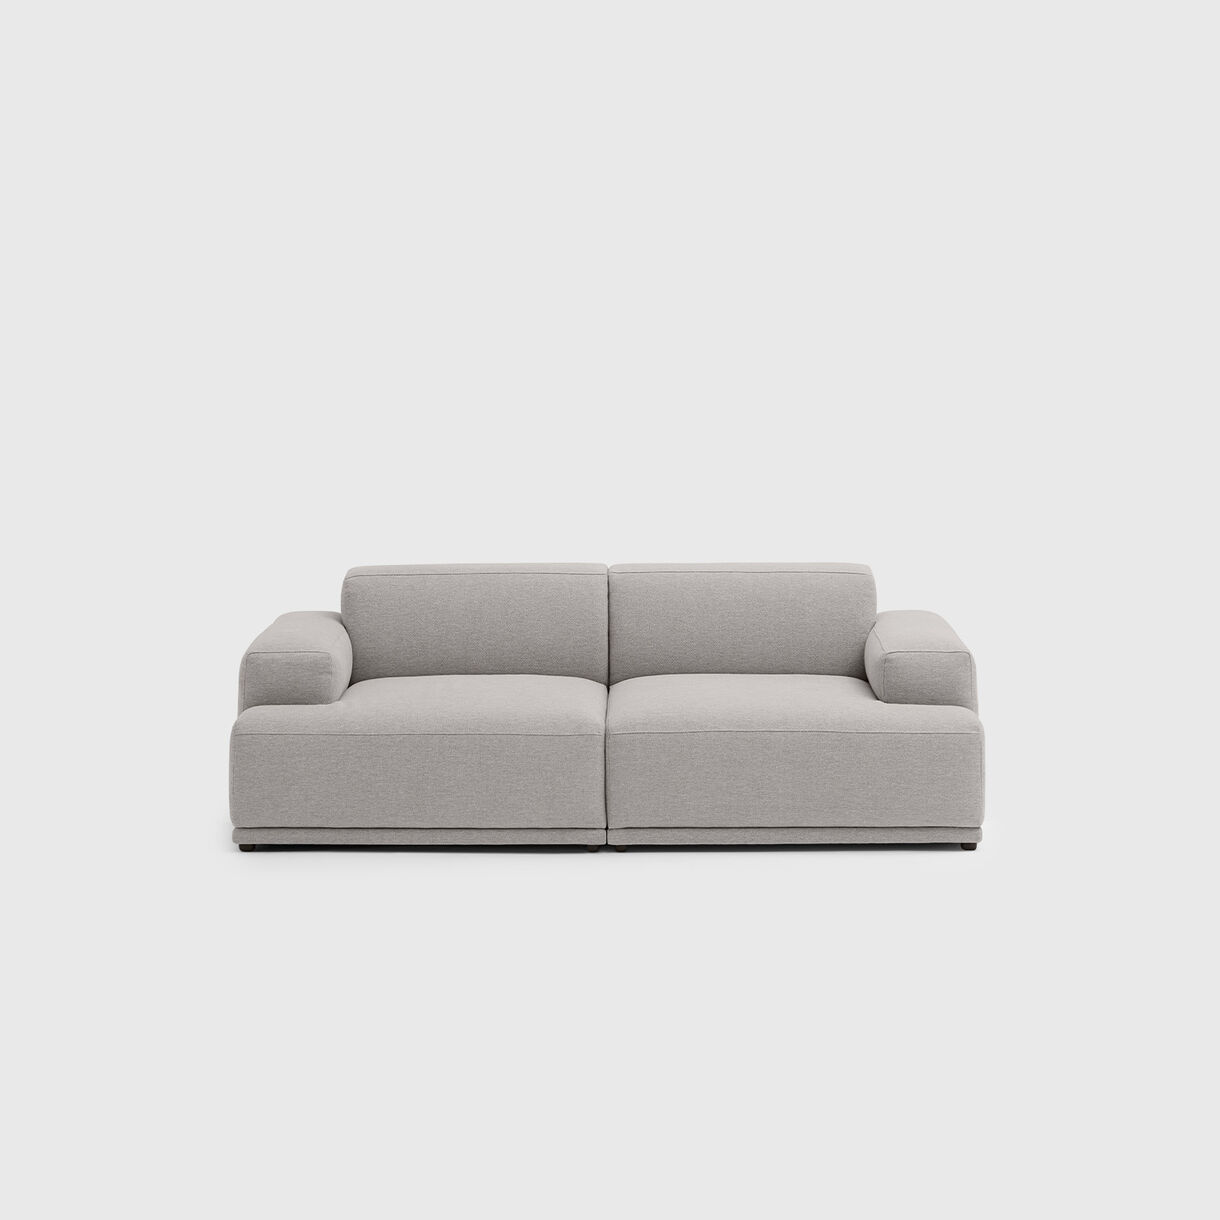 Connect Soft Modular Sofa, 2 Seater, Config 1, Clay 12